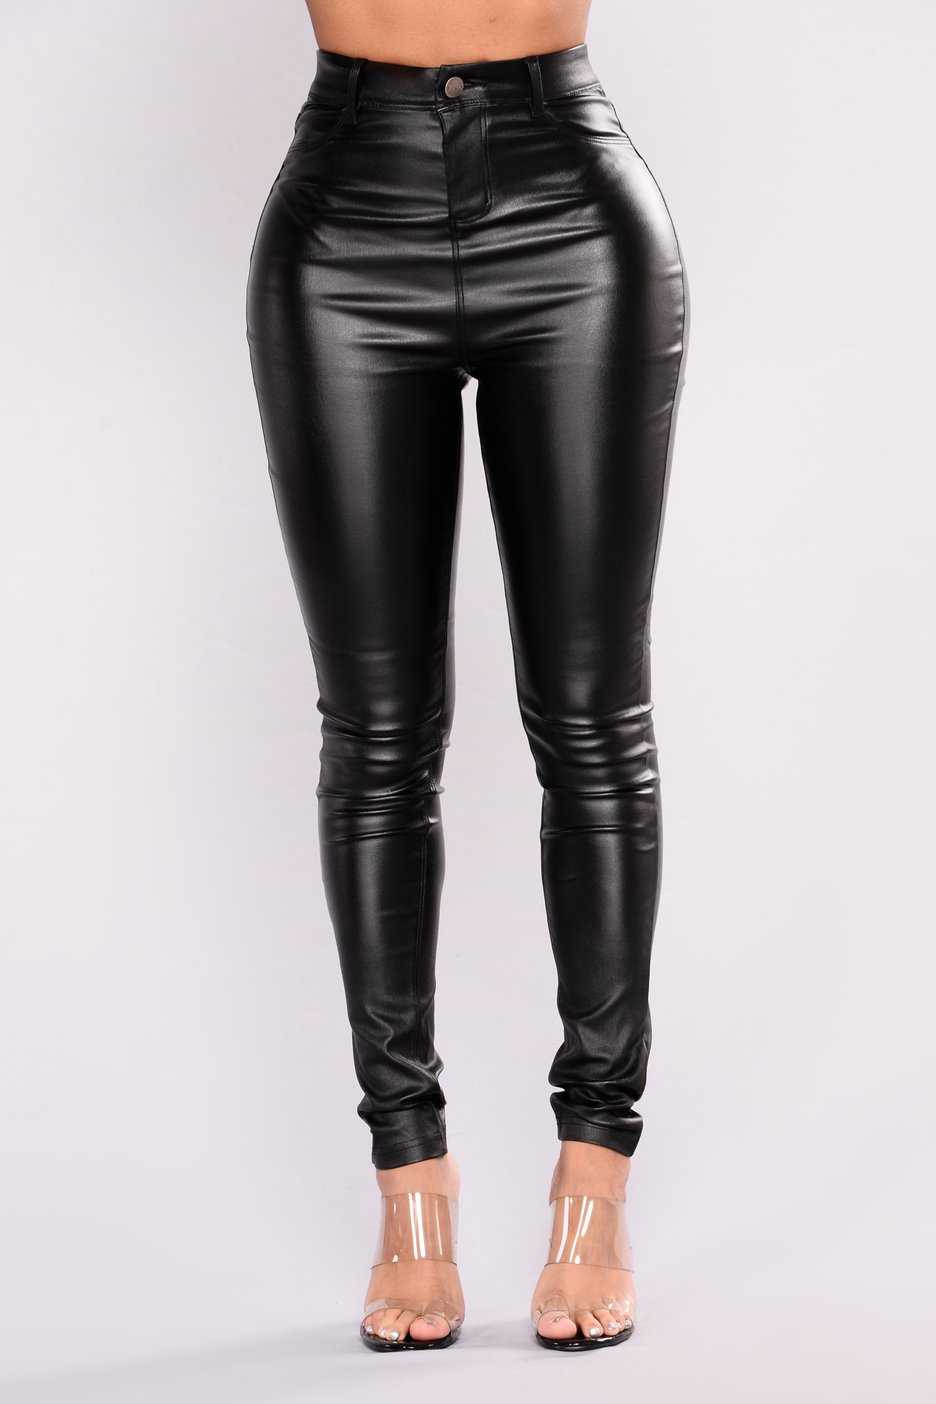 Lira Mercer Shows Off Her Figure in Fashion Nova Black Leather Pants ...